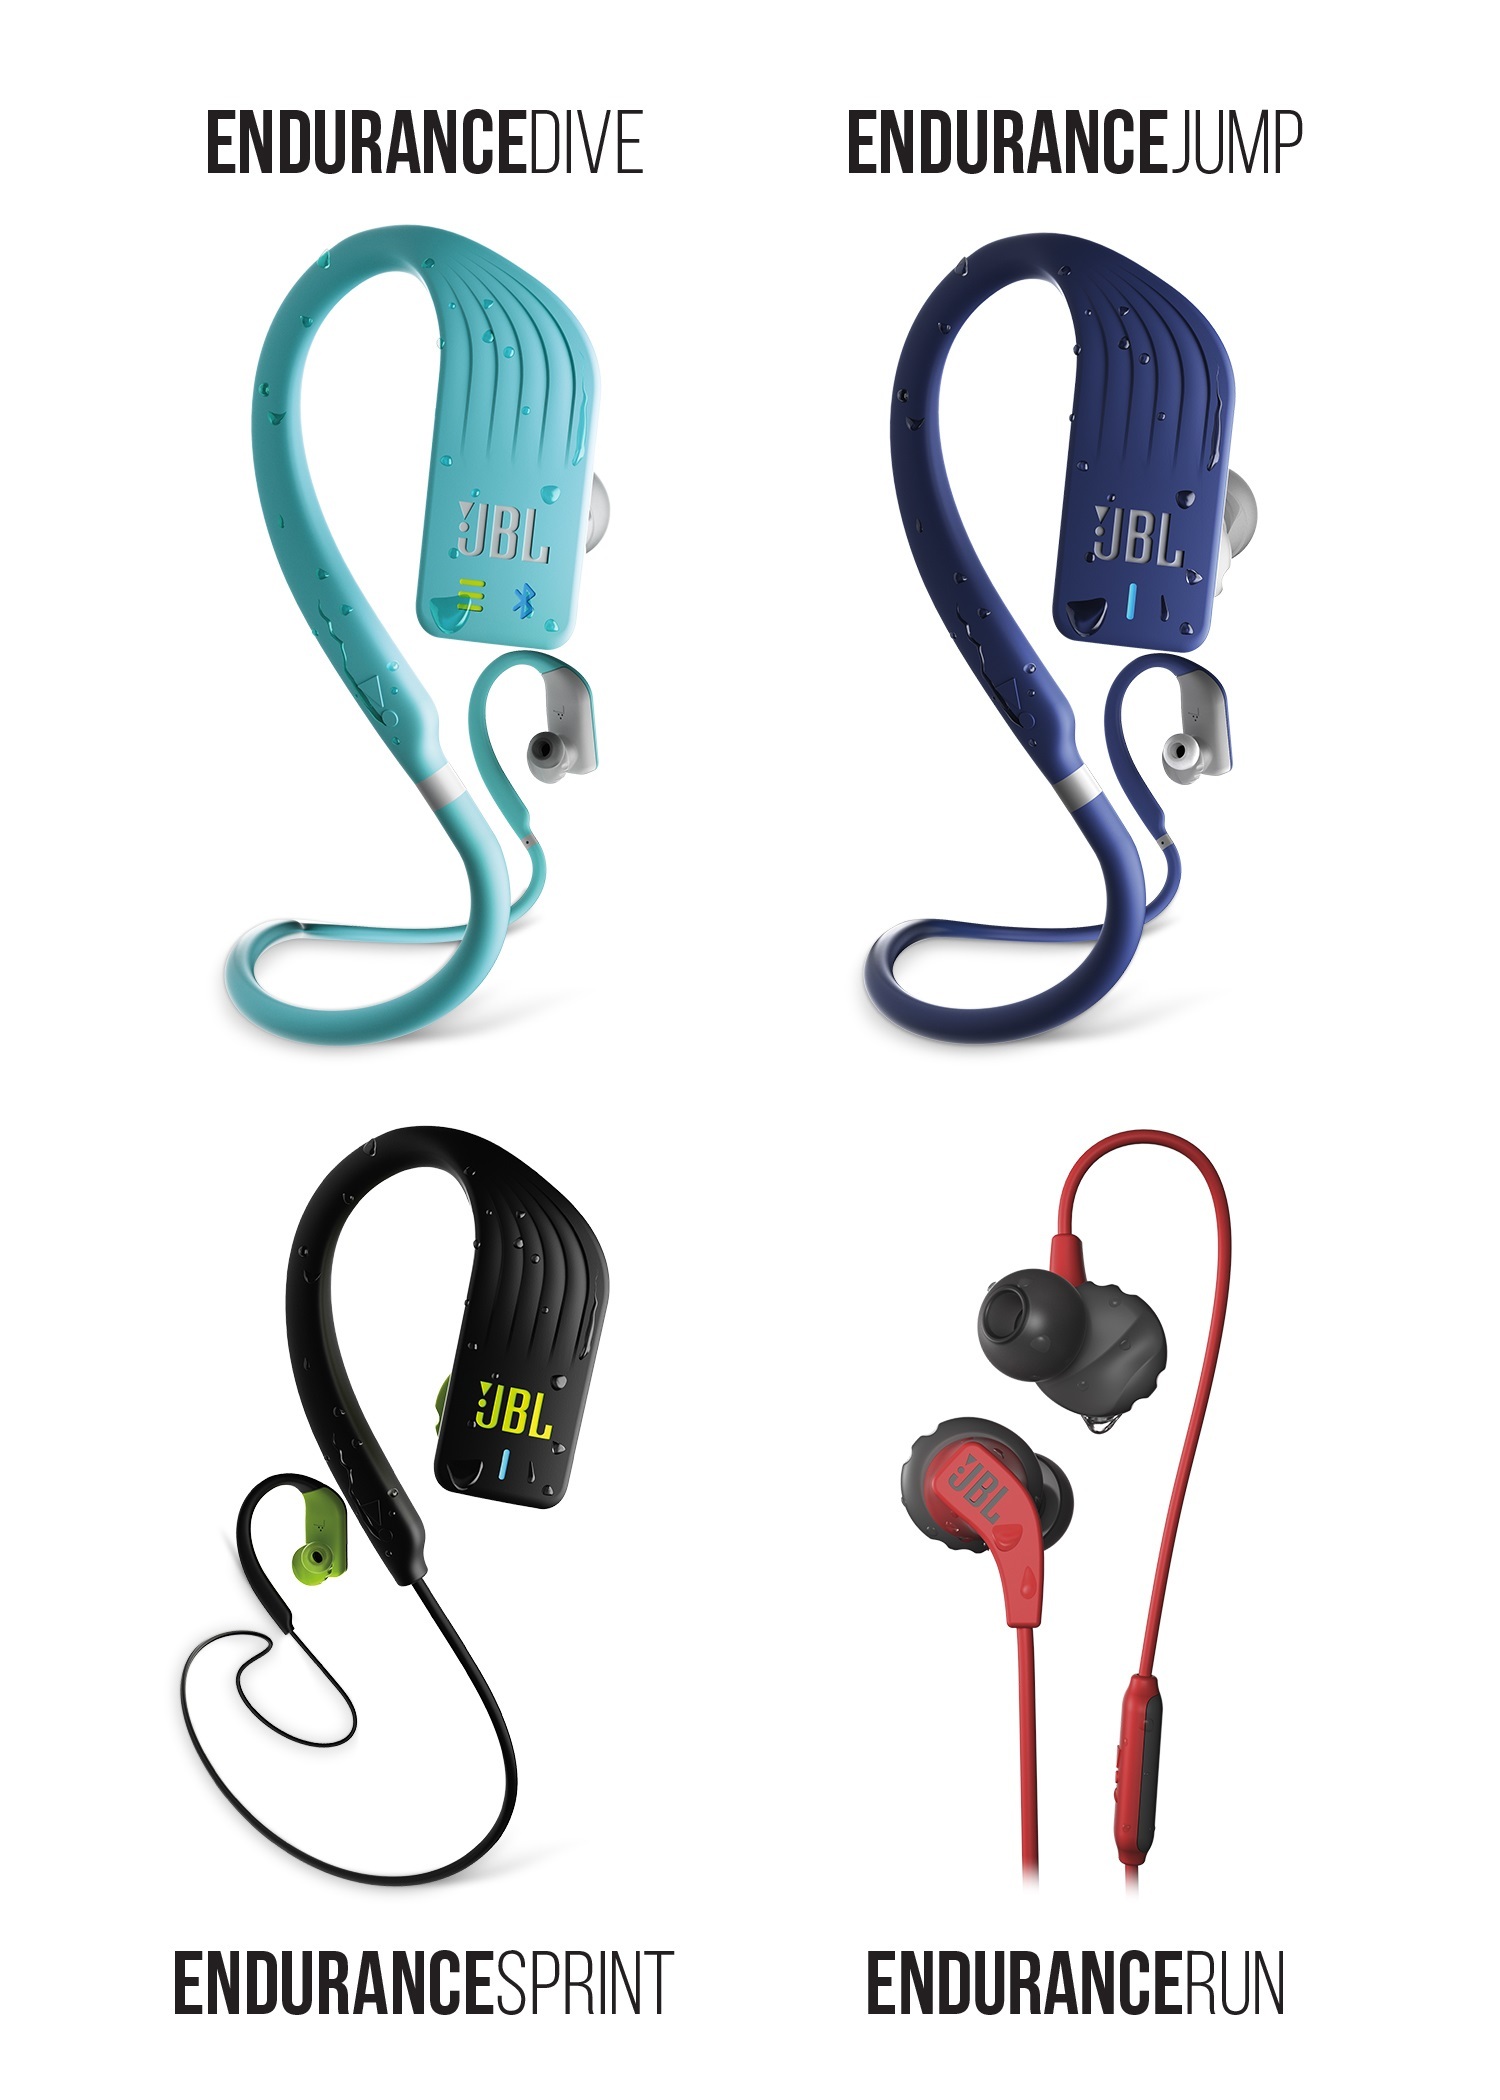 RUN, SPRINT, JUMP, JBL® Introduces Headphones Every Sport Business Wire